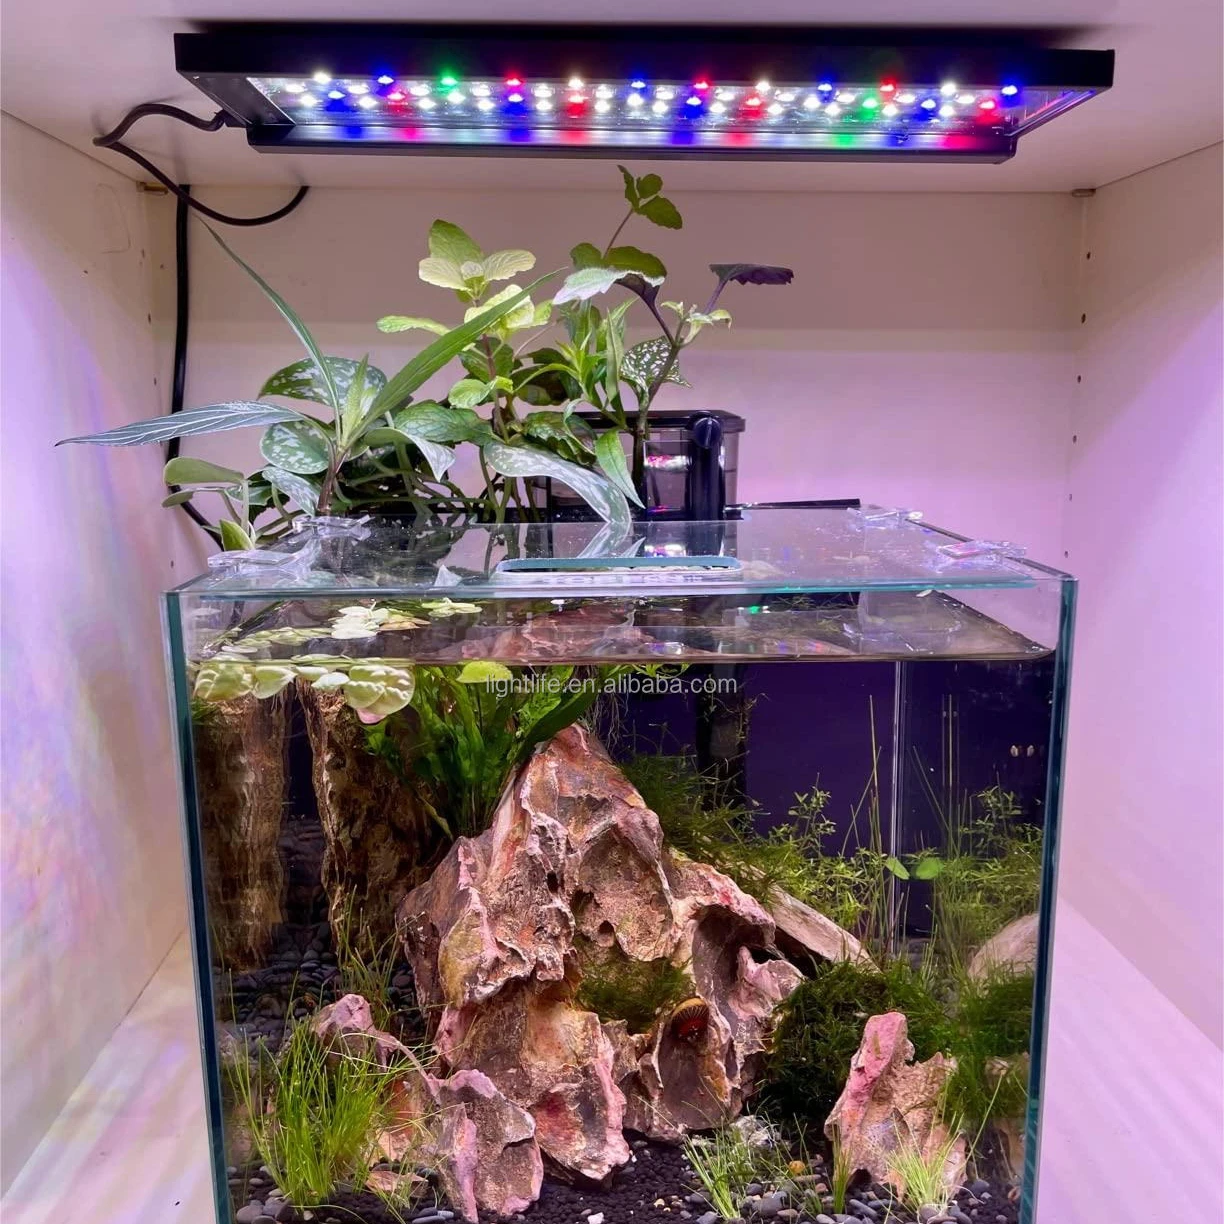 

11-55 Inch Adjustable Timer Brightness 9 Colors Clip On Full Spectrum Fish Tank LED Aquarium Lamp Plants Light With Remote